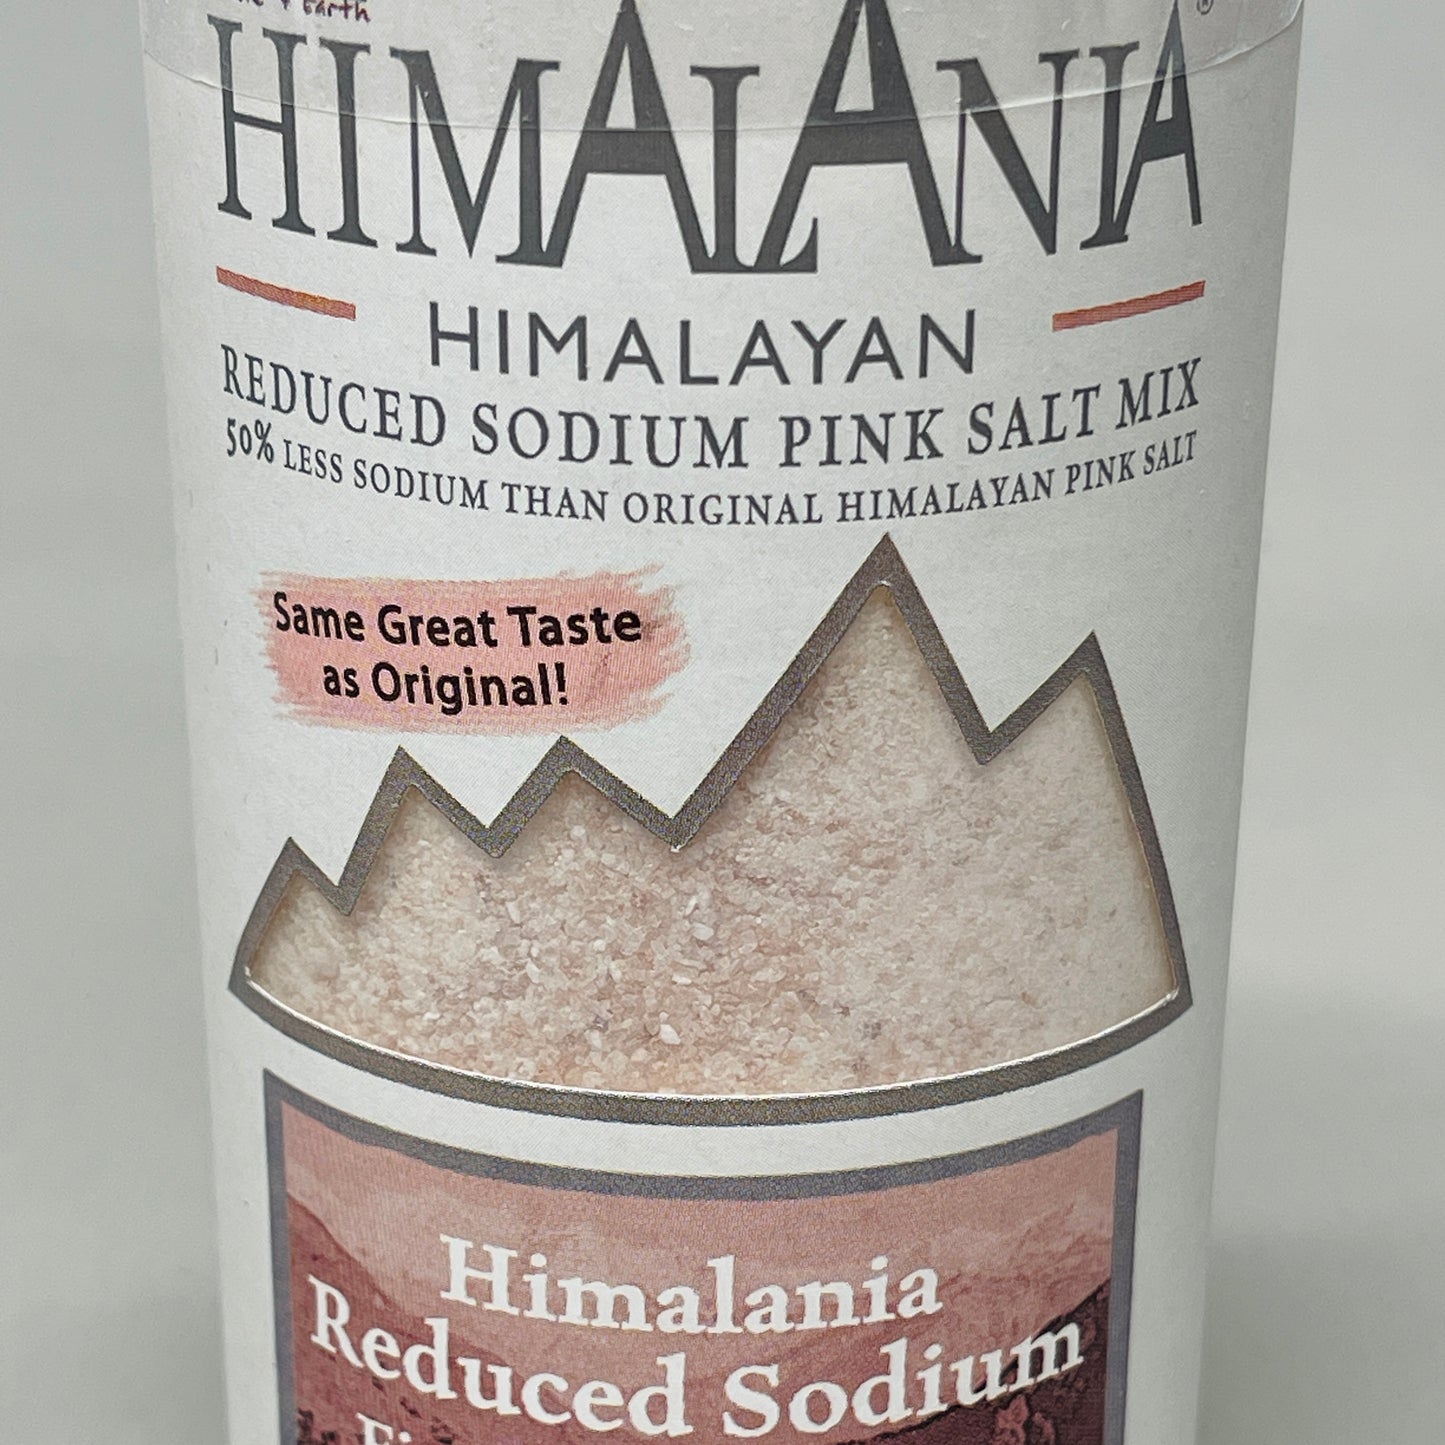 NATIERRA Nature & Earth Himalania Reduced Sodium Fine Pink Salt Mix 13 oz Shaker (New)